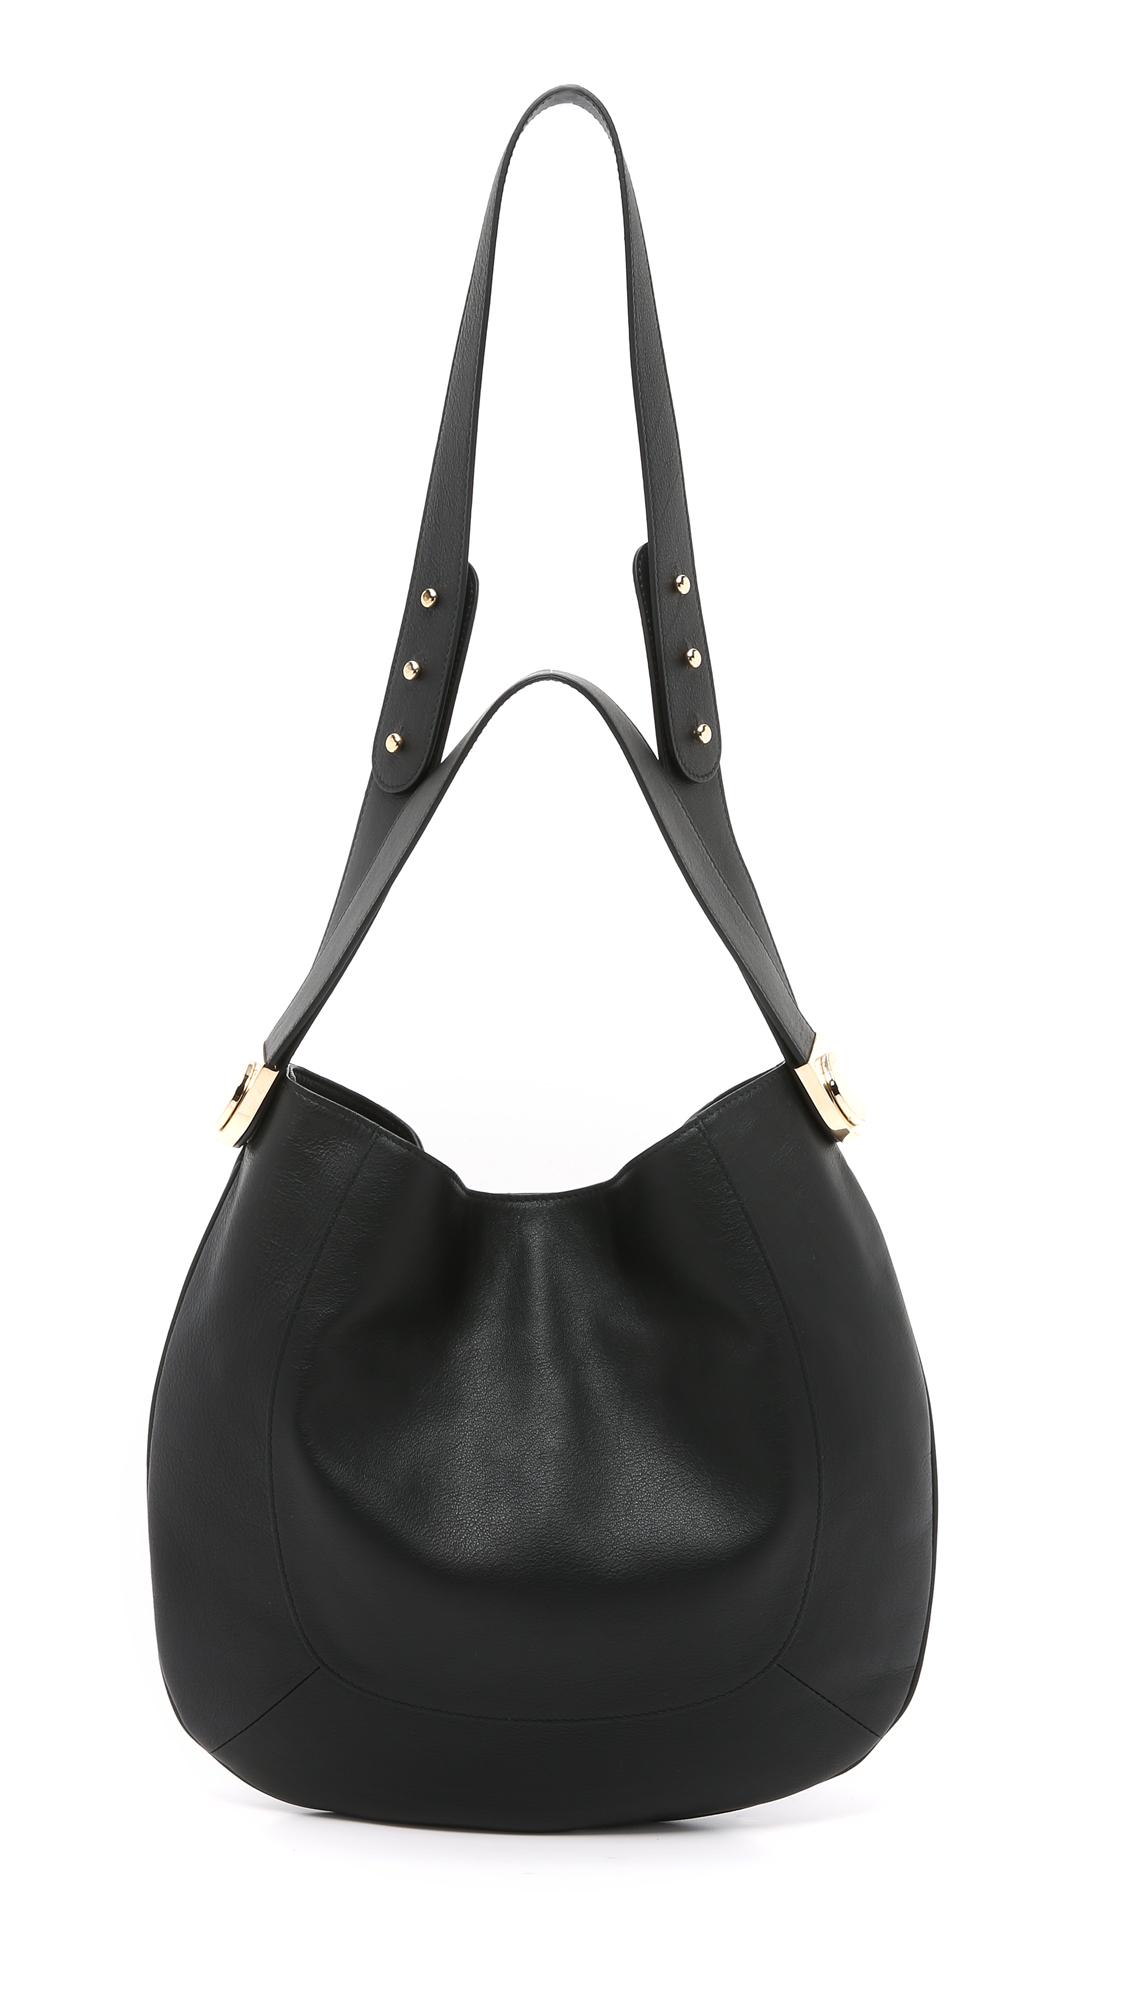 Lyst - Furla Luna Hobo Bag in Black